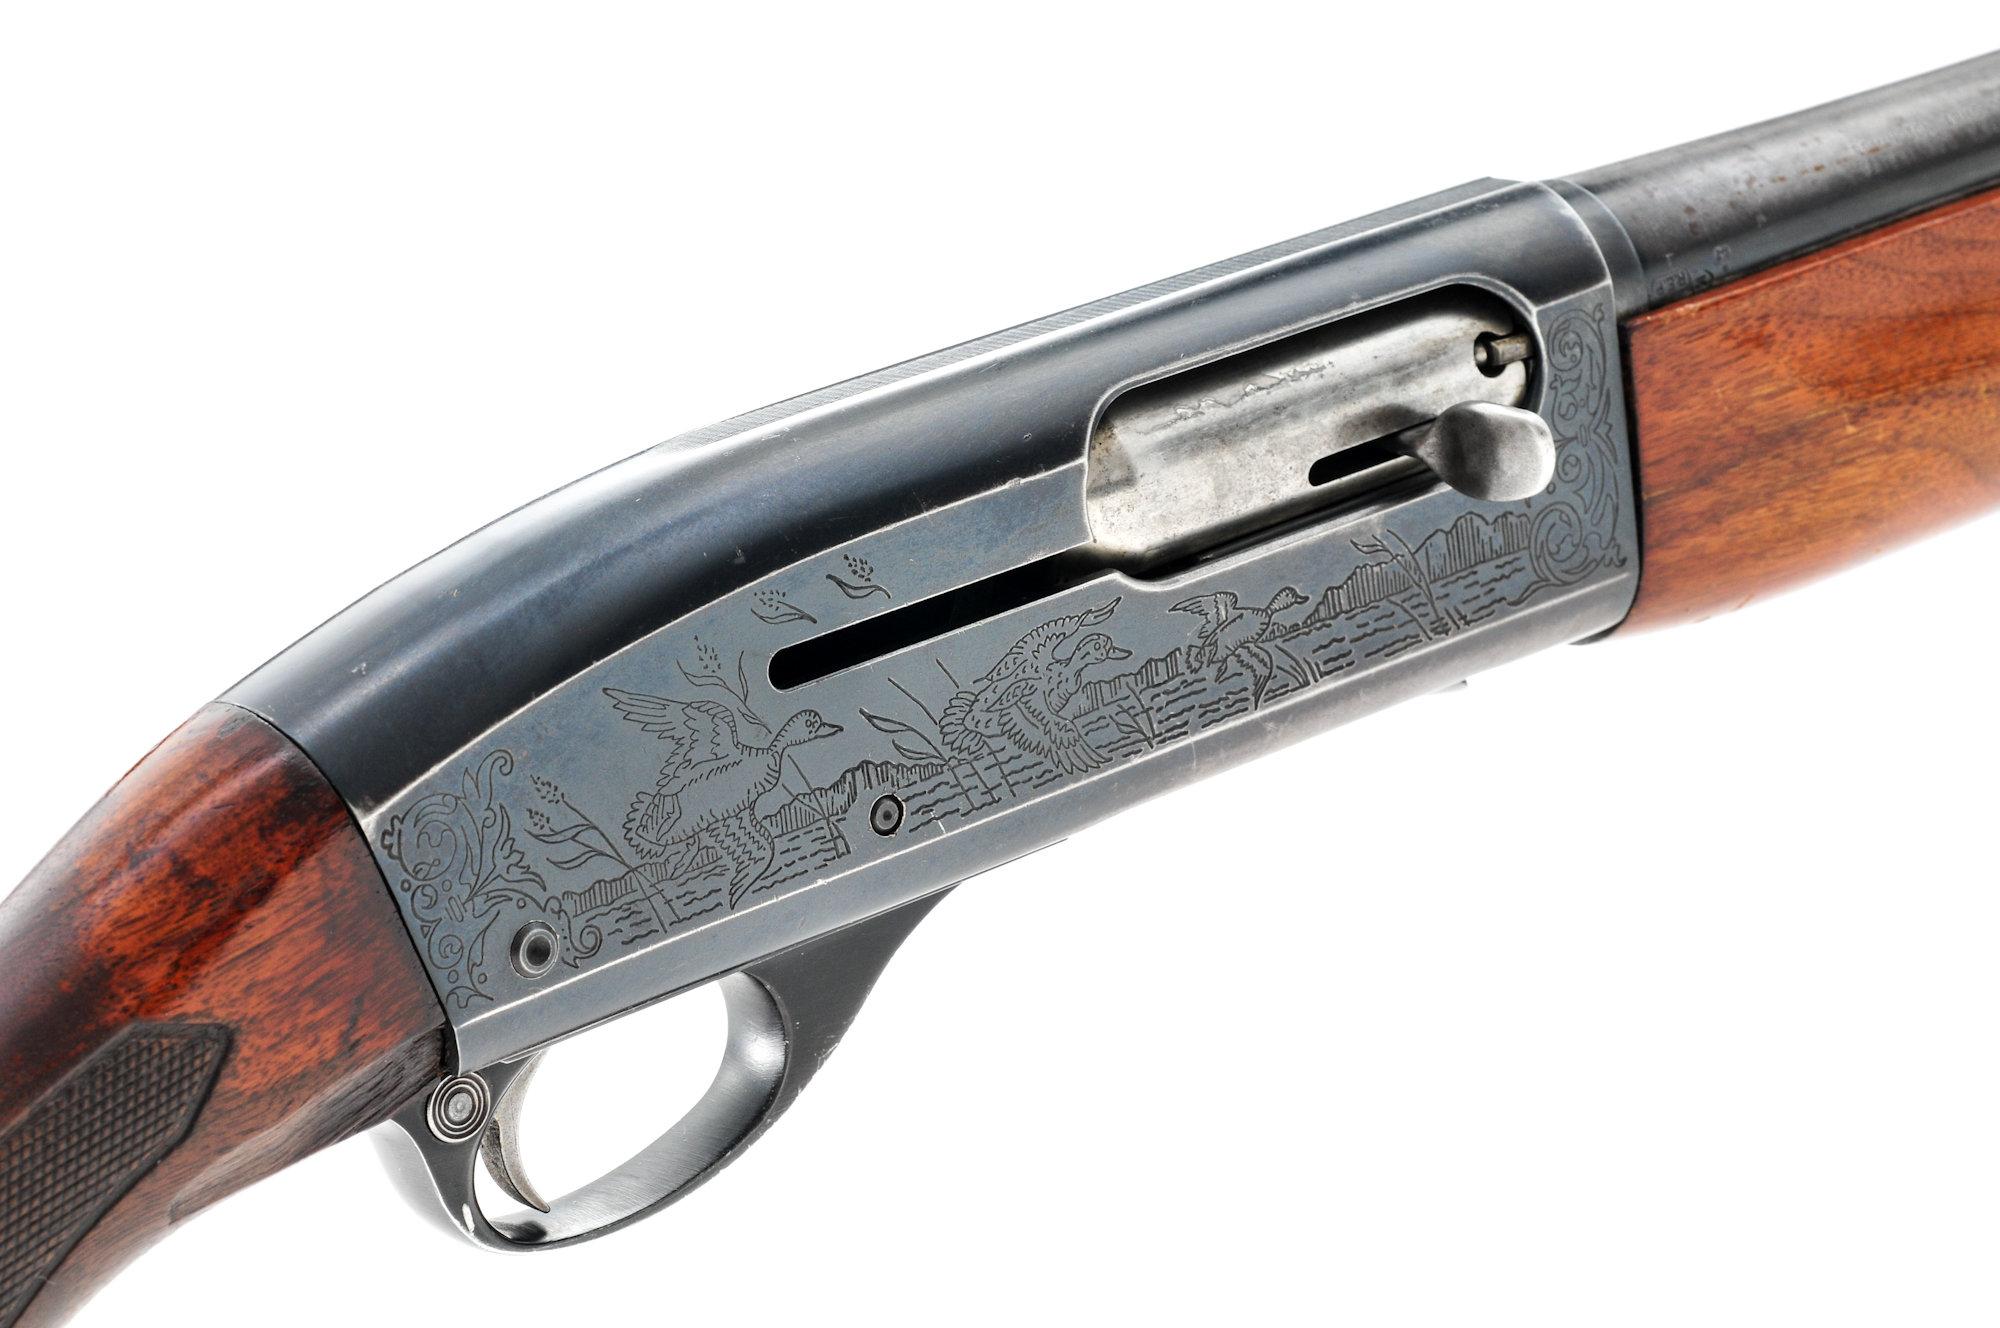 Lot of 2 Remington ''Sportsman 58'' SA Shotguns